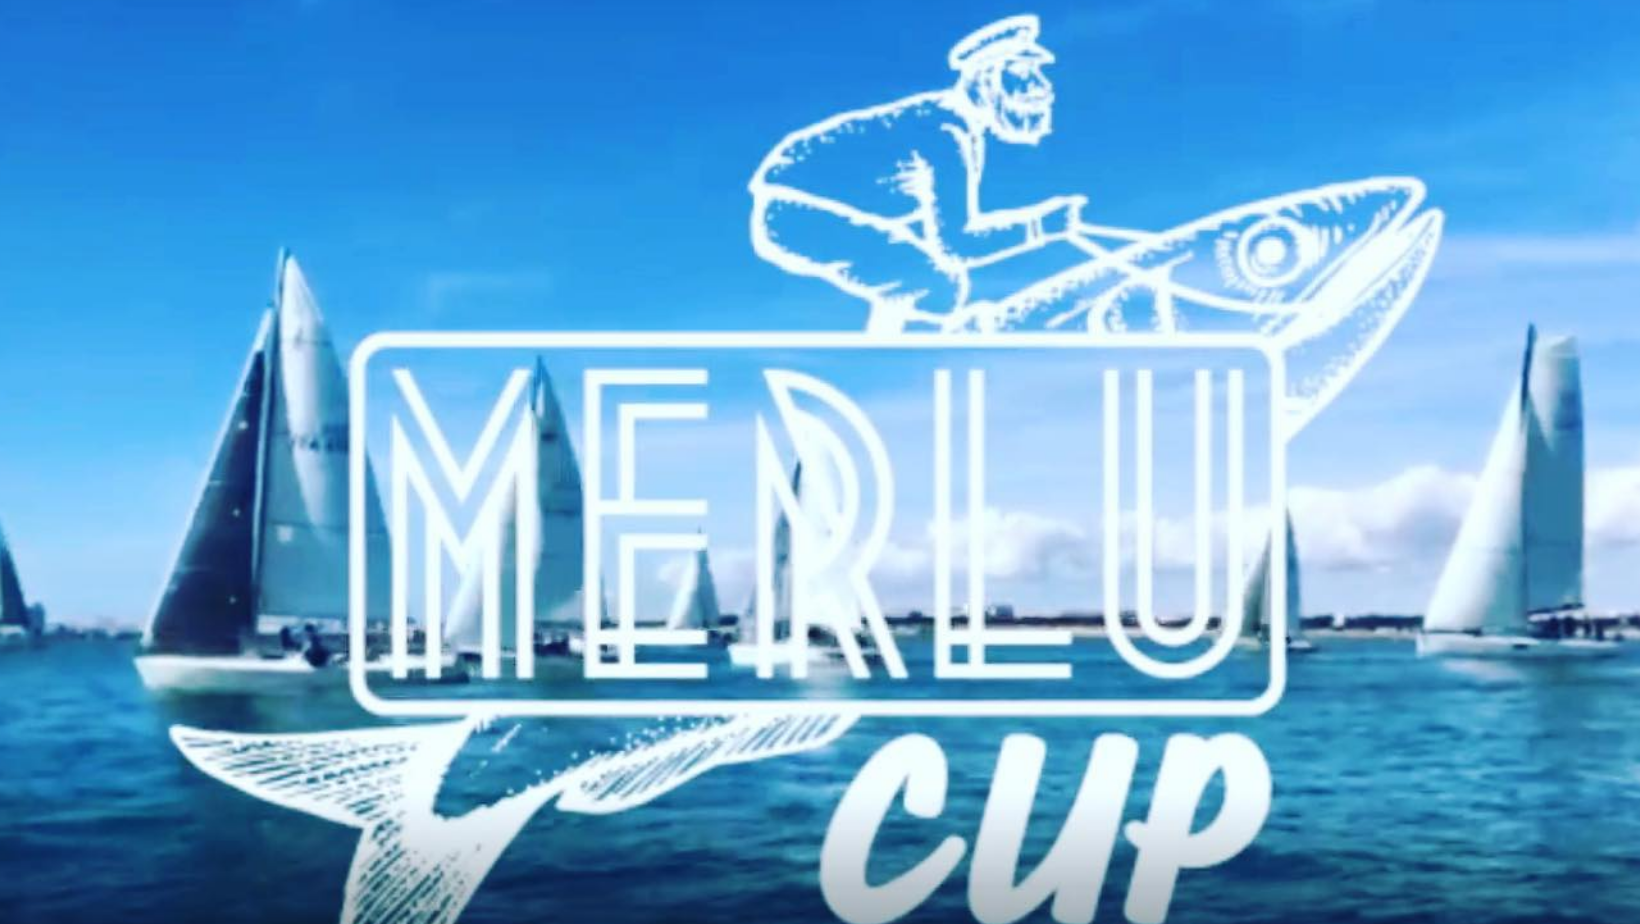 MERLU’S CUP (9 et 10 septembre)